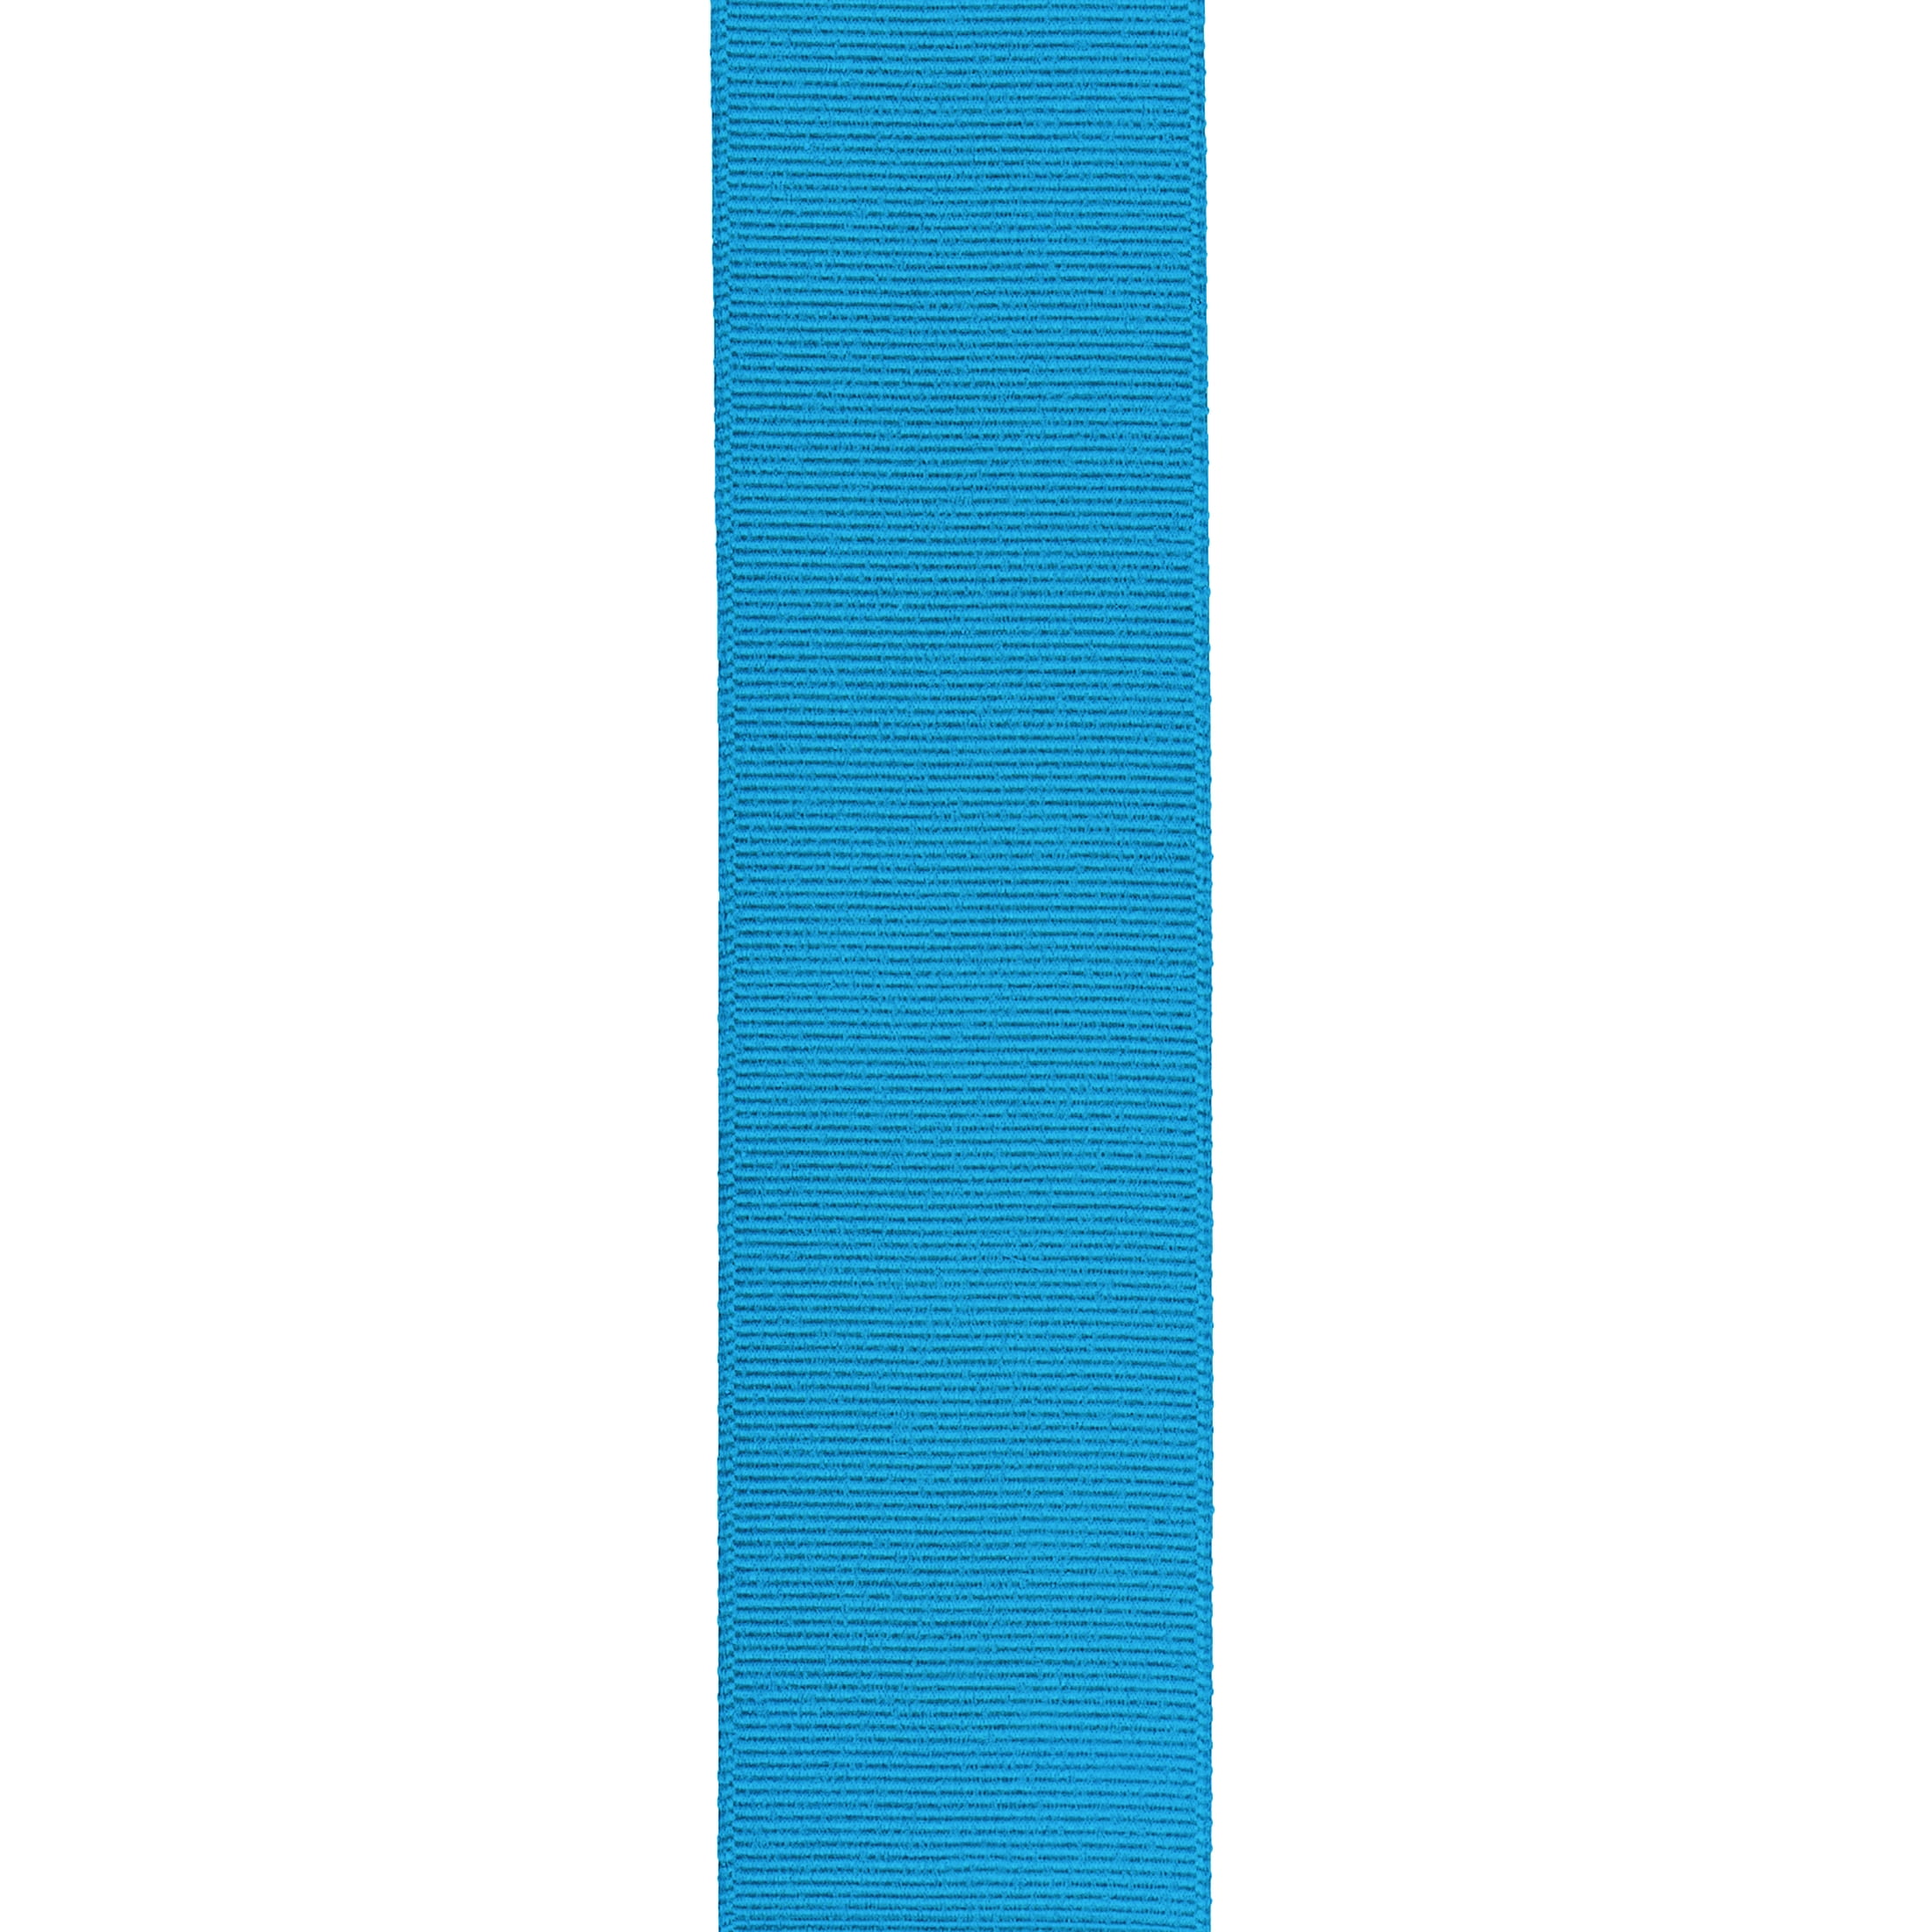 LaRibbons and Crafts 2¼ Premium Textured Grosgrain Ribbon Century Blue